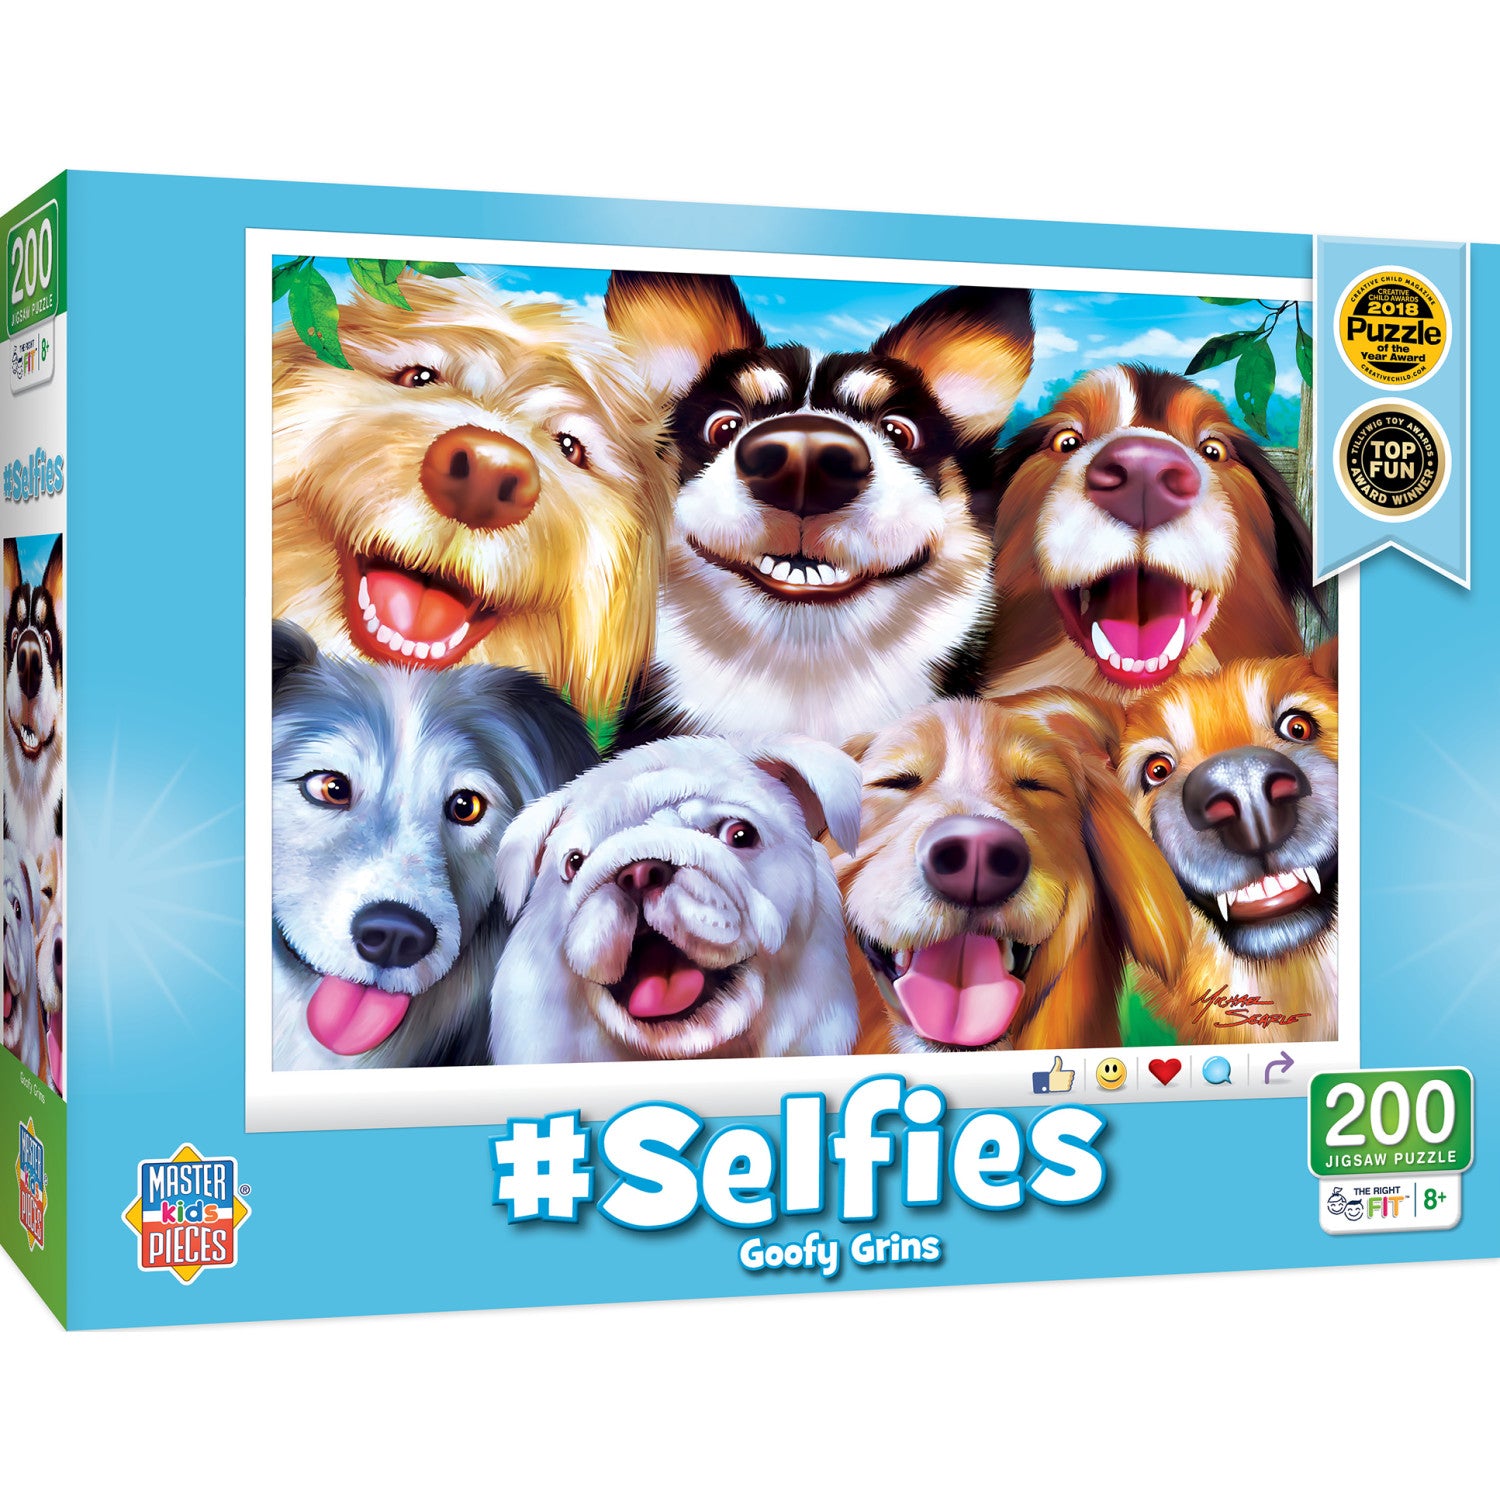 Selfies - Goofy Grins 200 Piece Jigsaw Puzzle